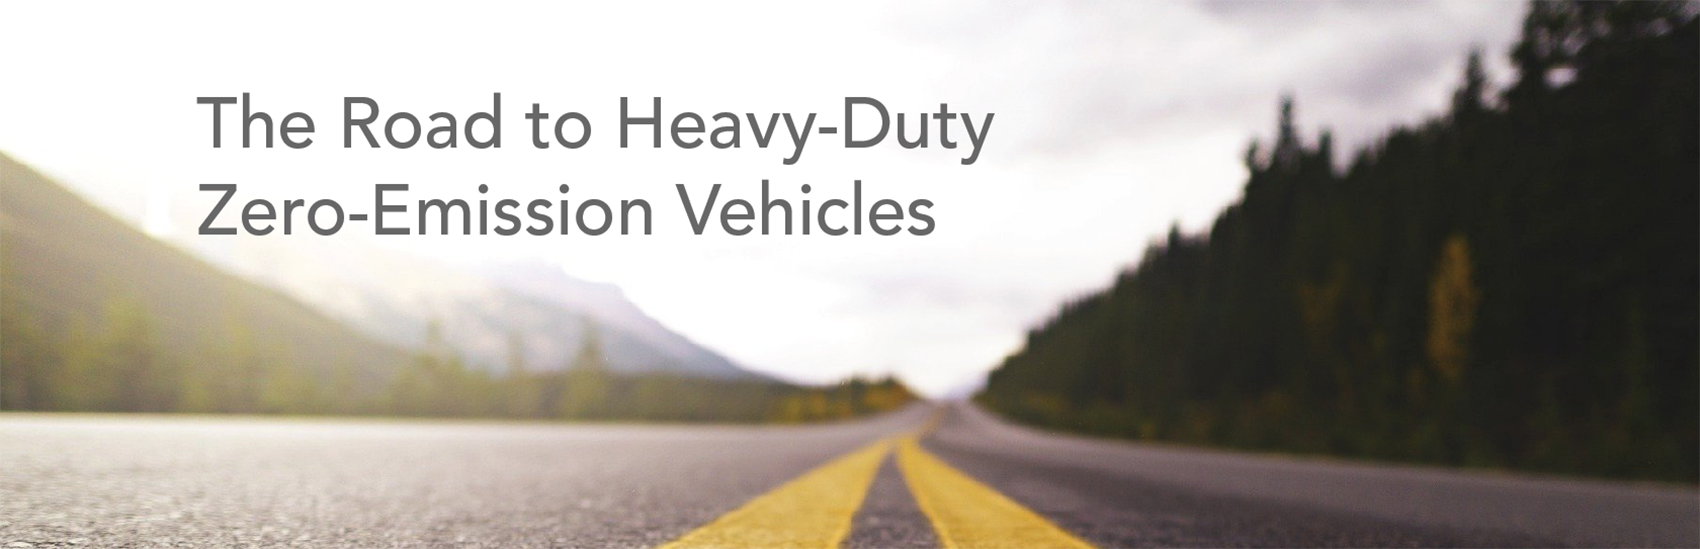 the road to Heavy-duty zero-emission vehicles.